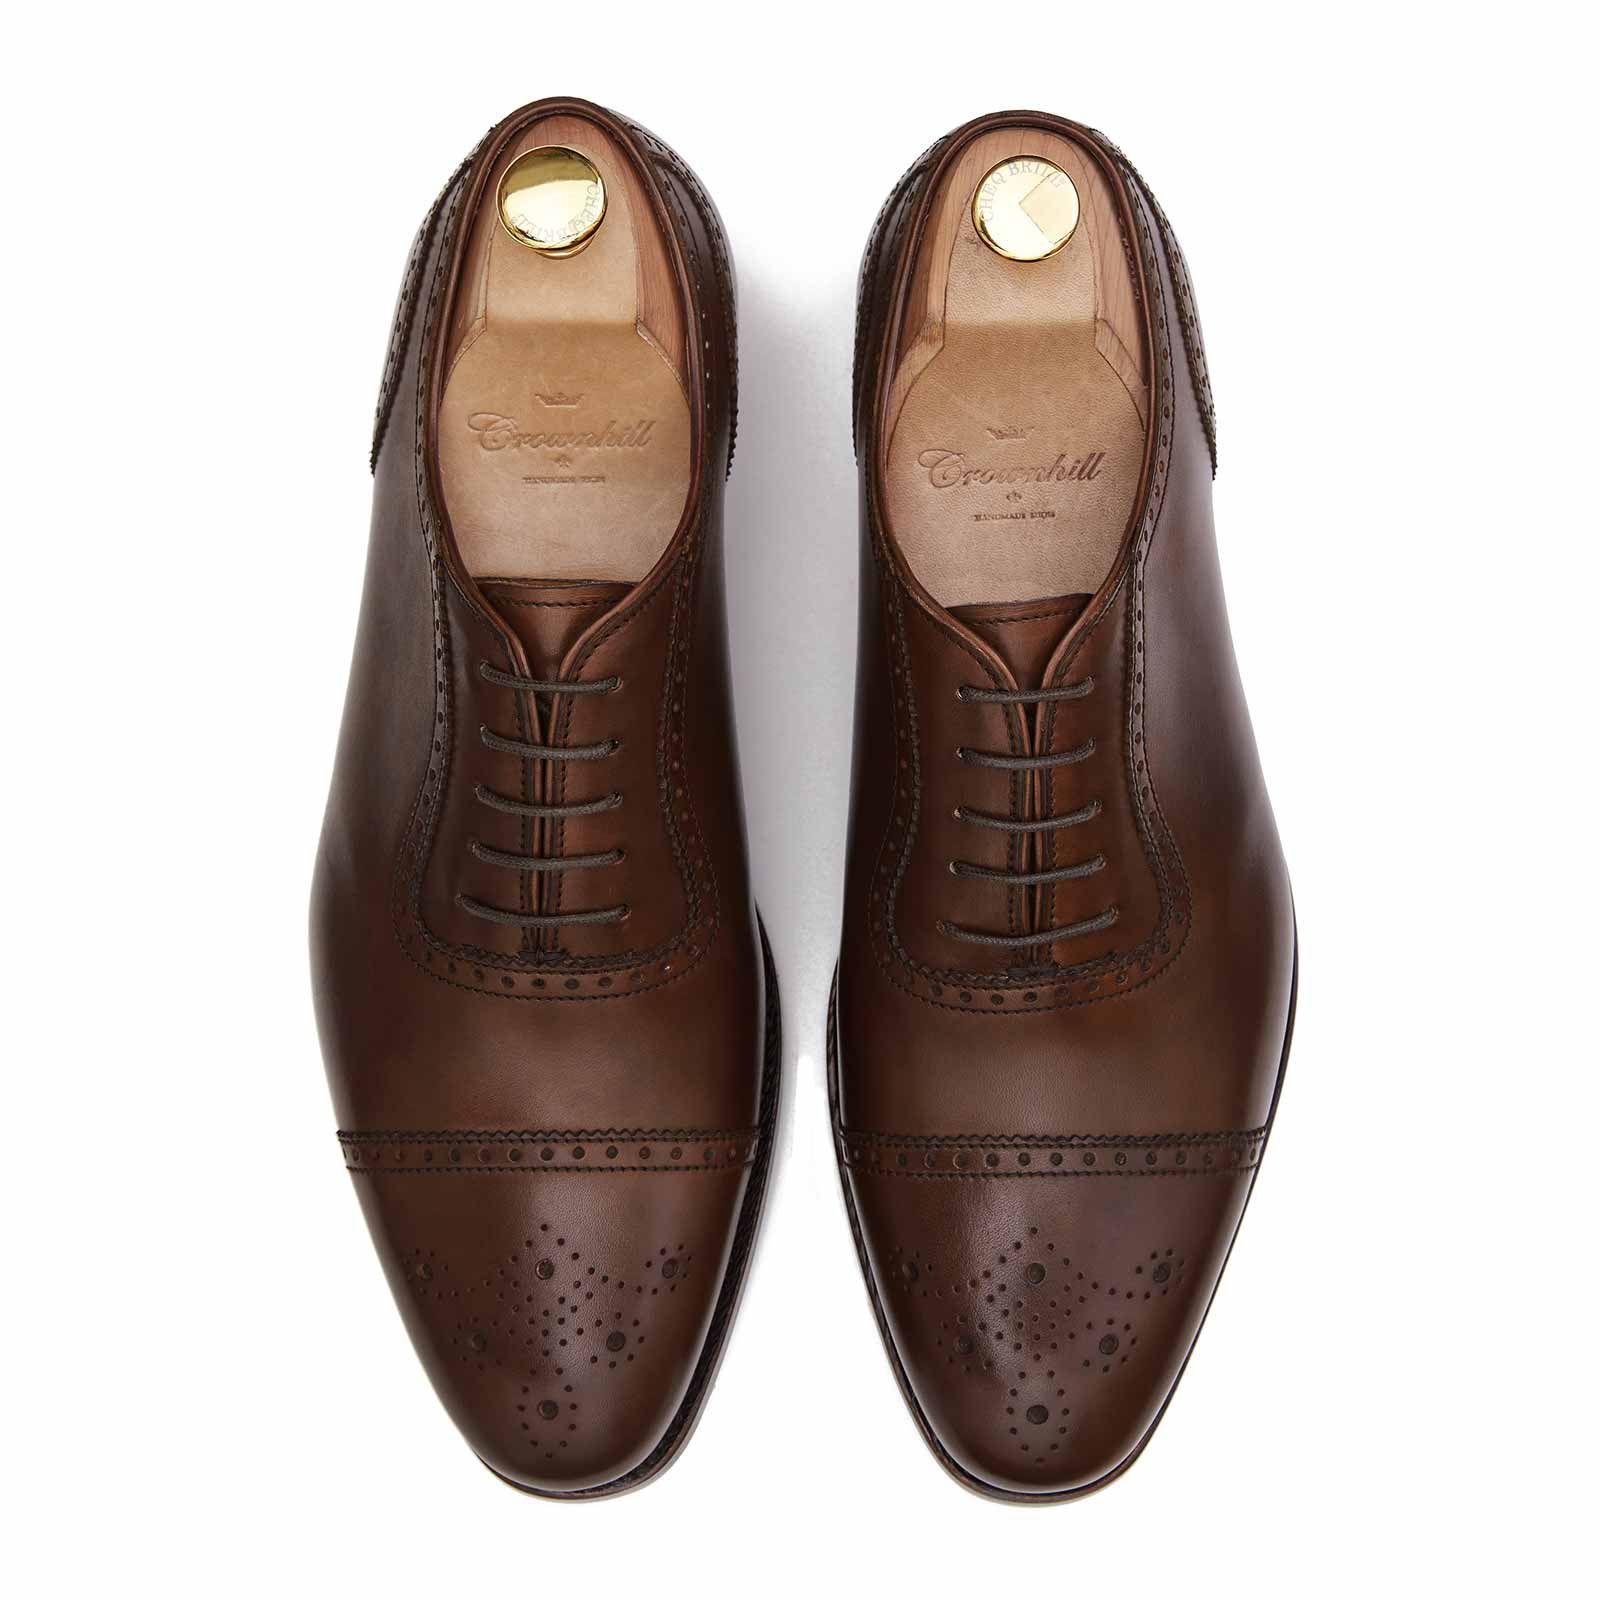 New Reims: Zapato Oxford Legate piel Marrón Crownhill Shoes